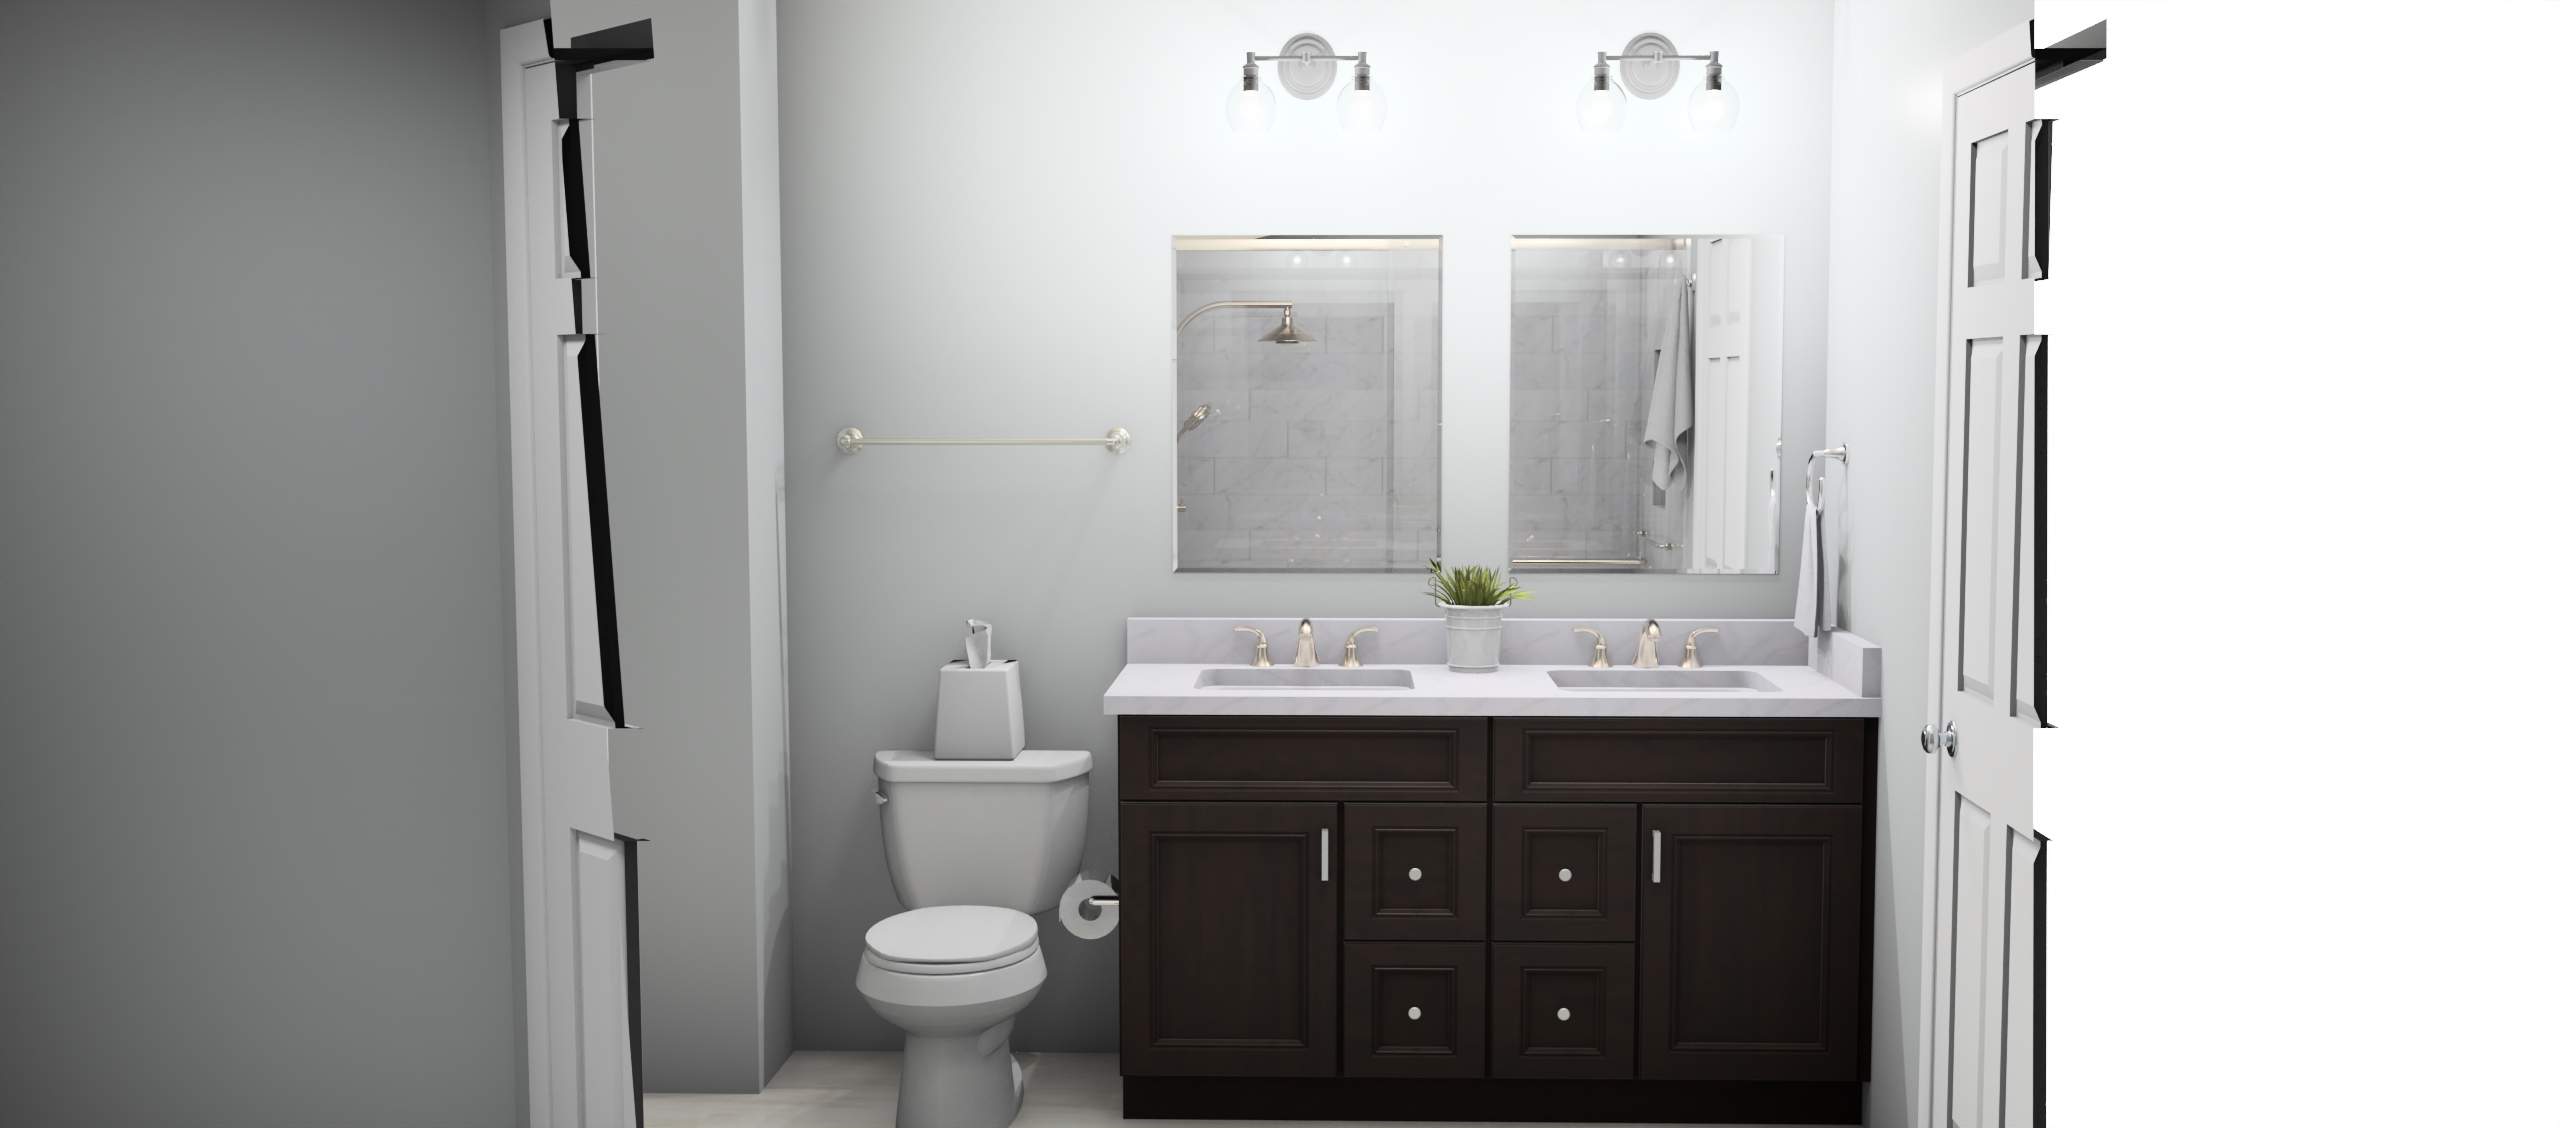 bathroom remodel dave kolenc 2 - Keselman Construction Group Inc